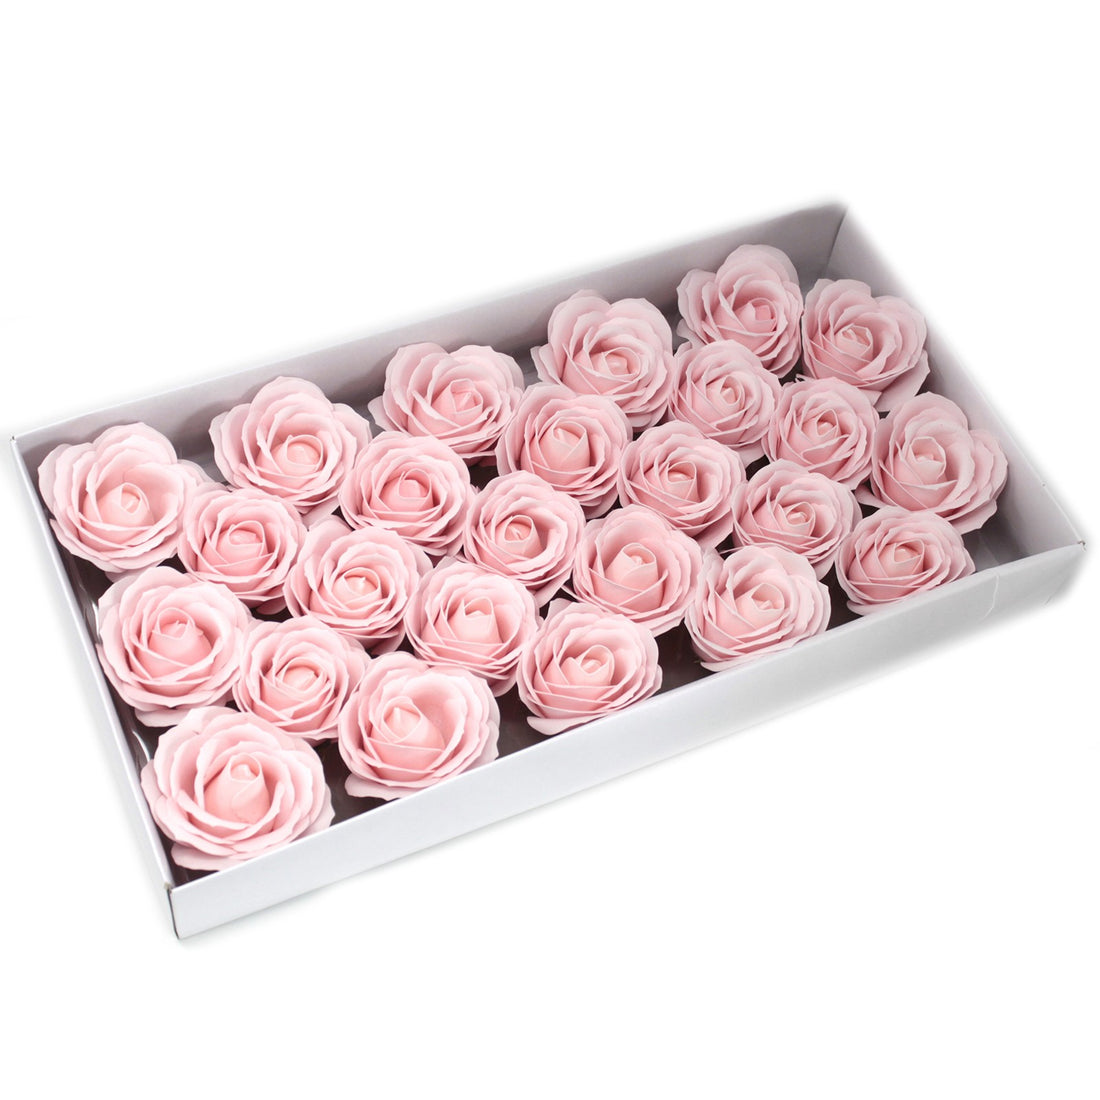 Craft Soap Flowers - Lrg Rose - Pink x 10 pcs